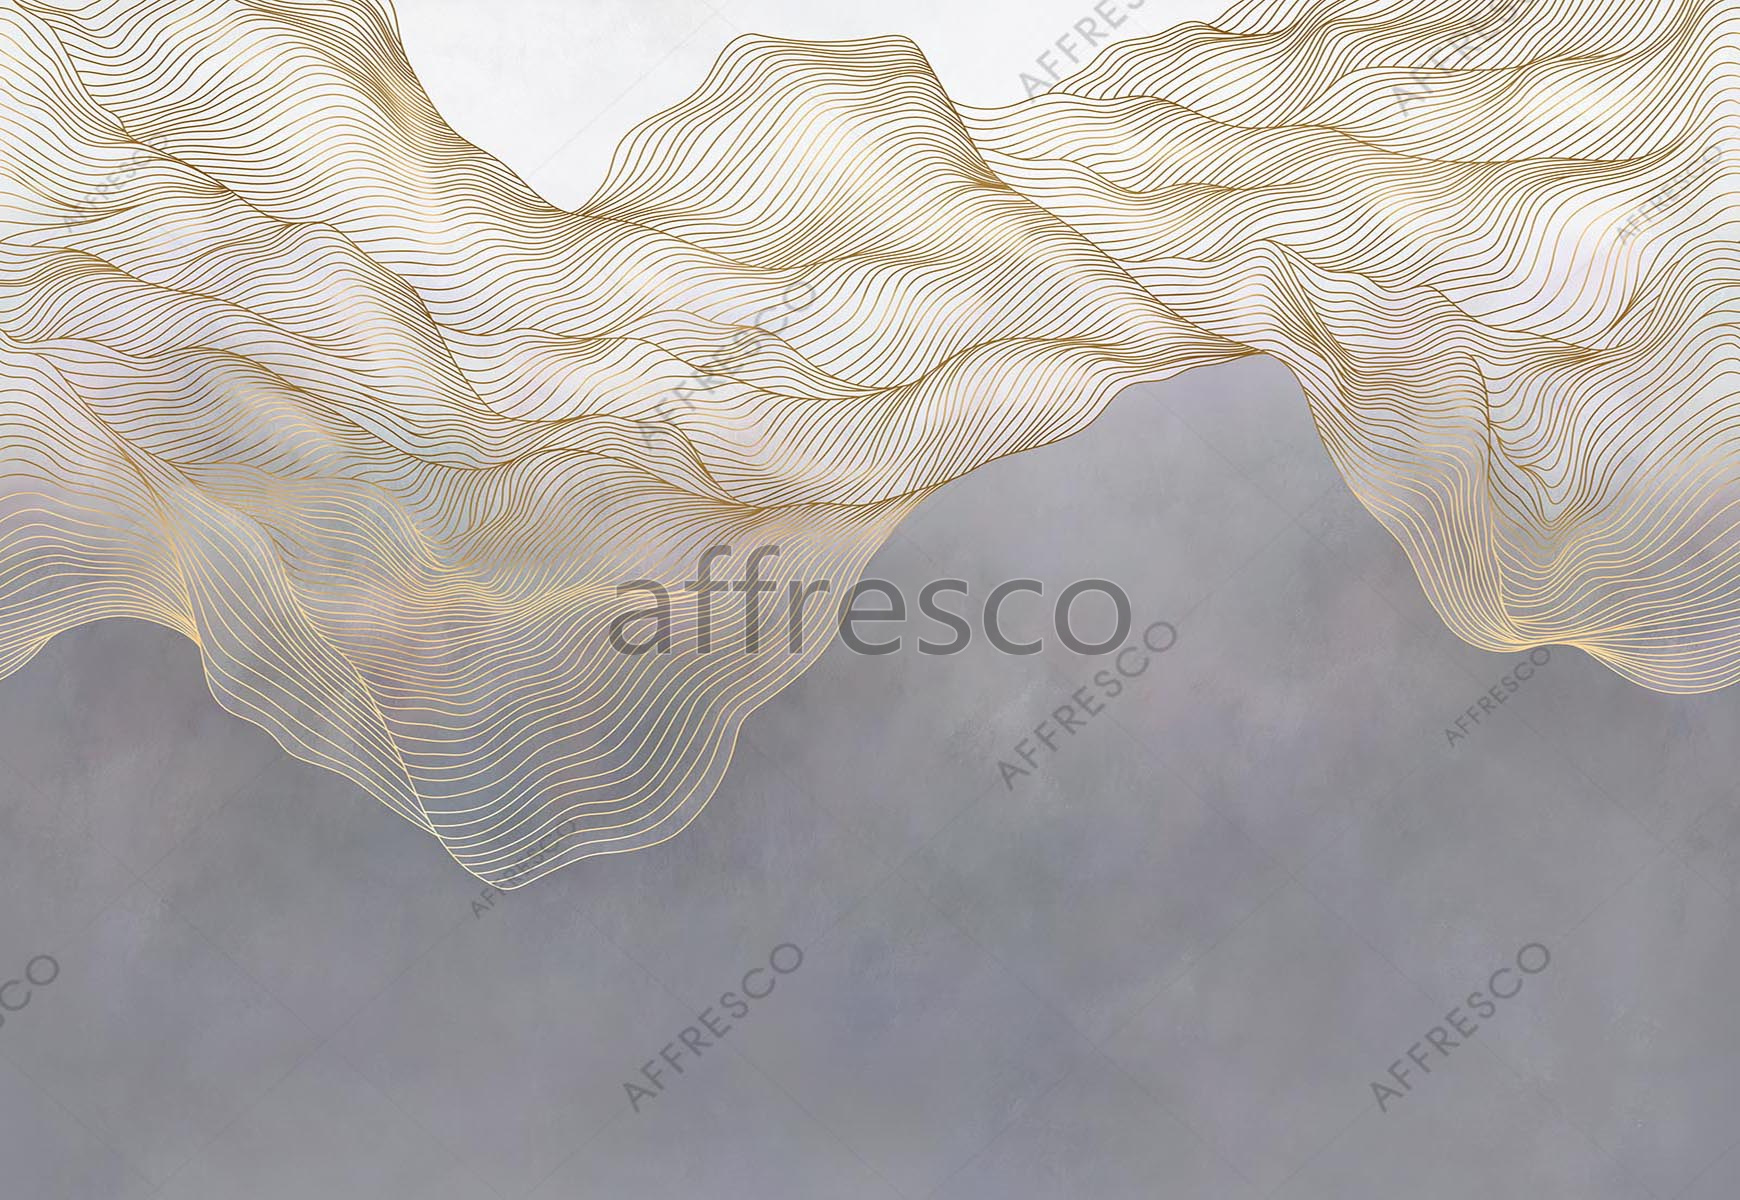 ID139125 | Textures | wave | Affresco Factory